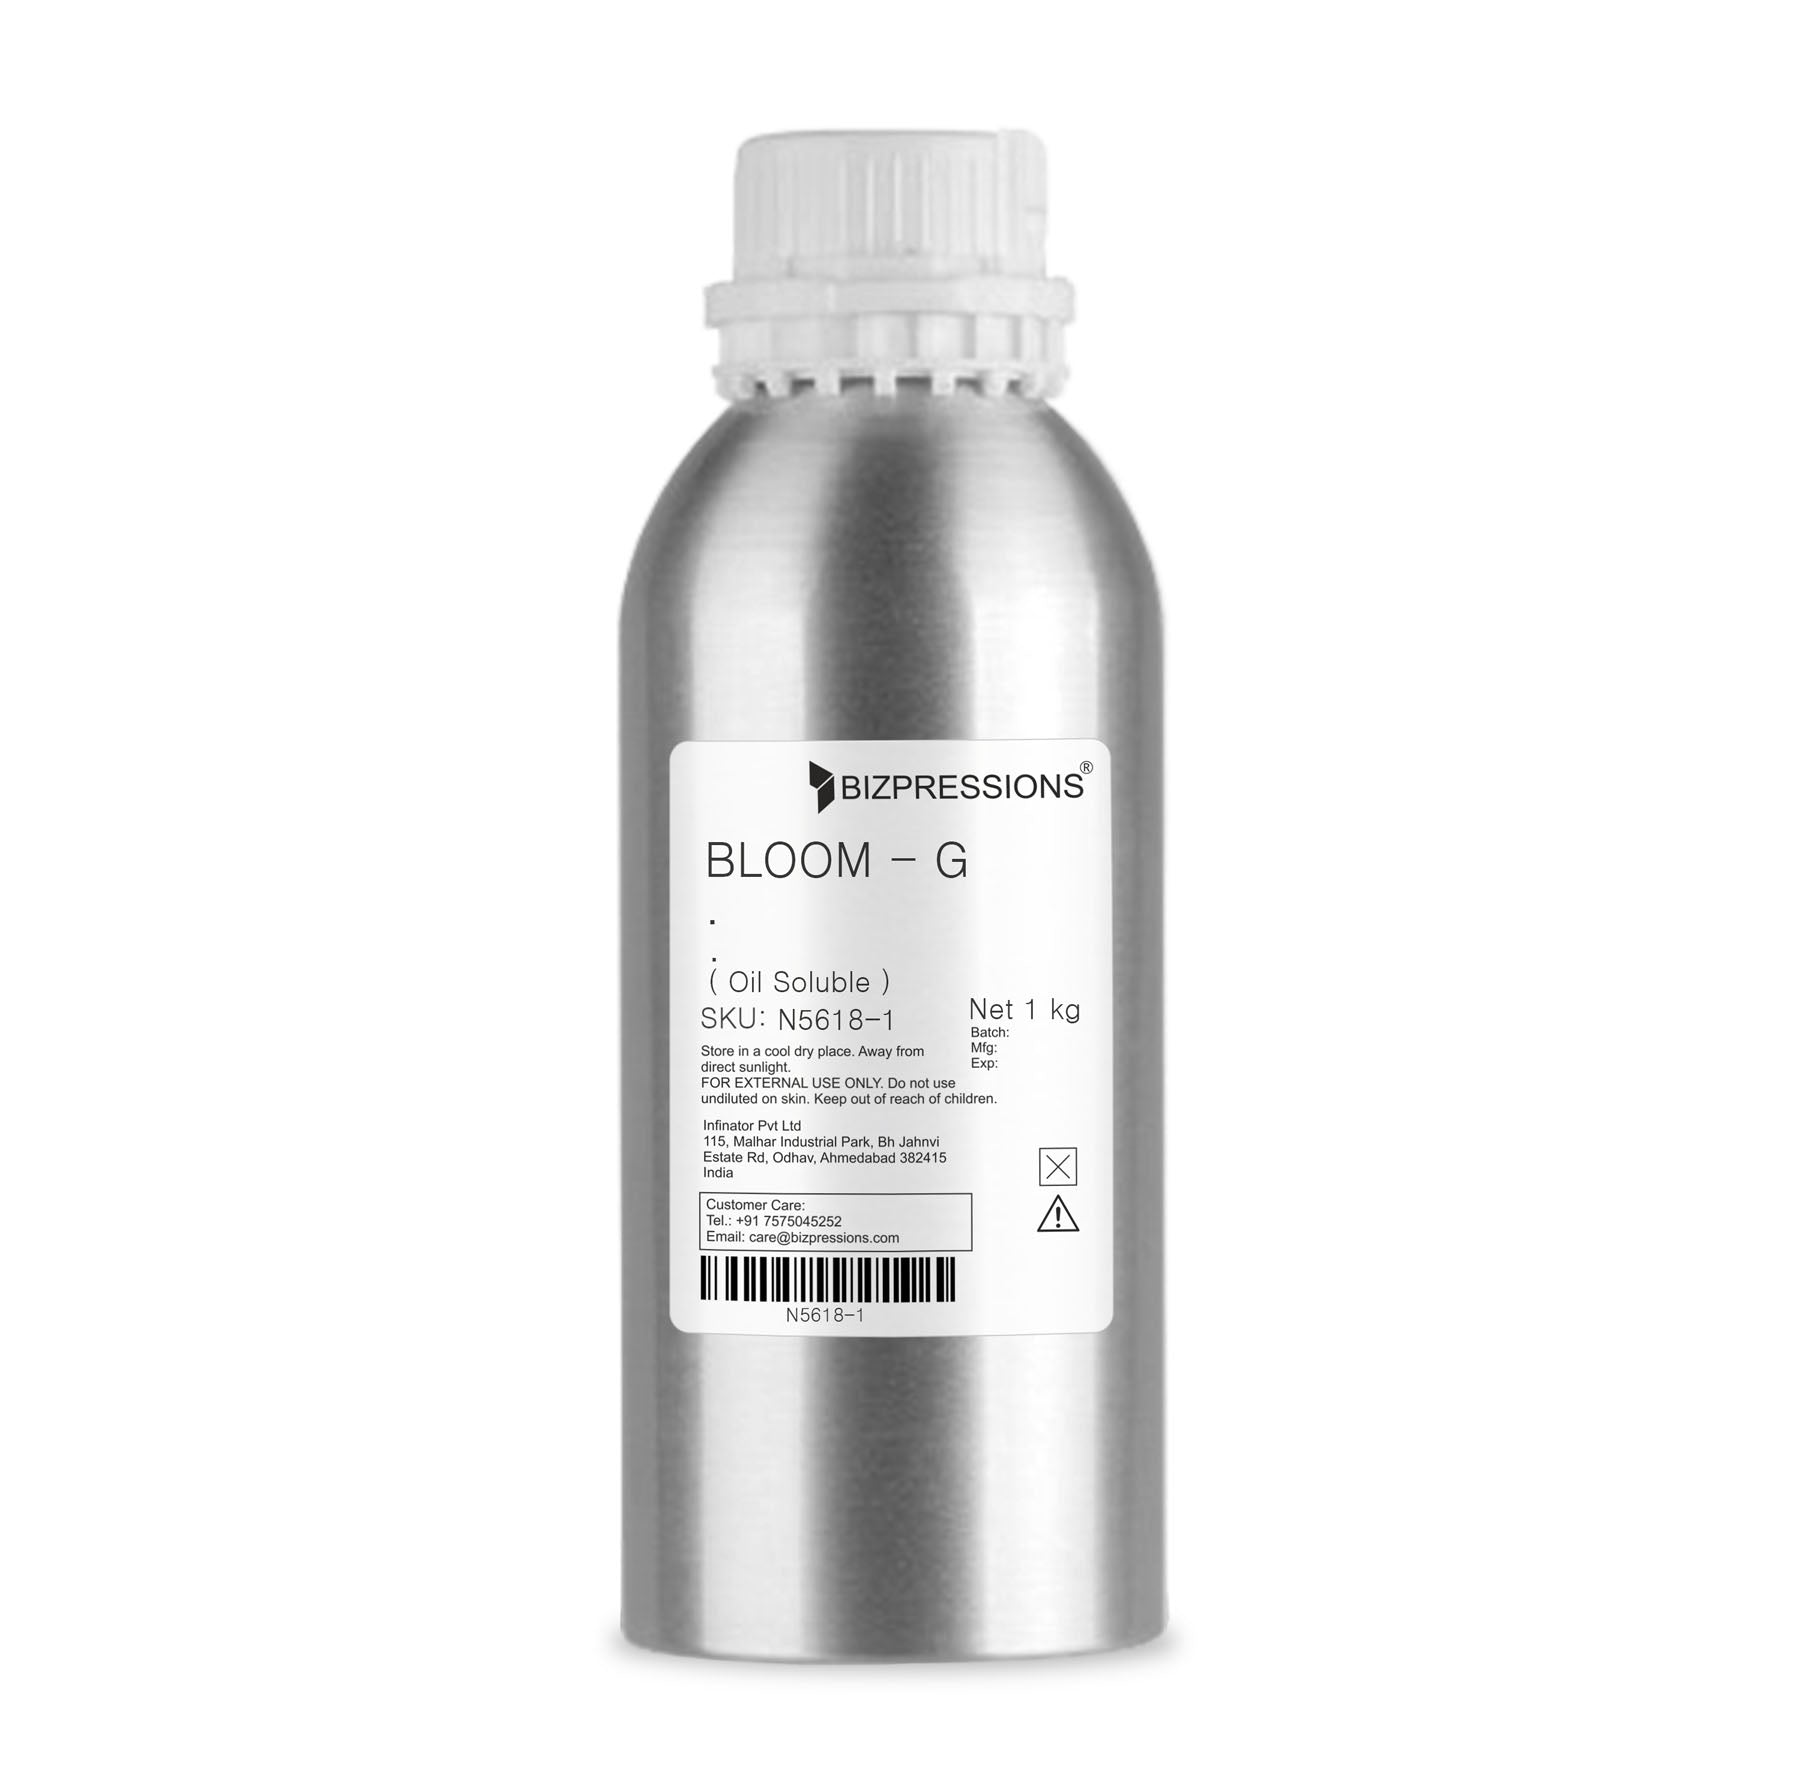 BLOOM - G - Fragrance ( Oil Soluble ) - 1 kg